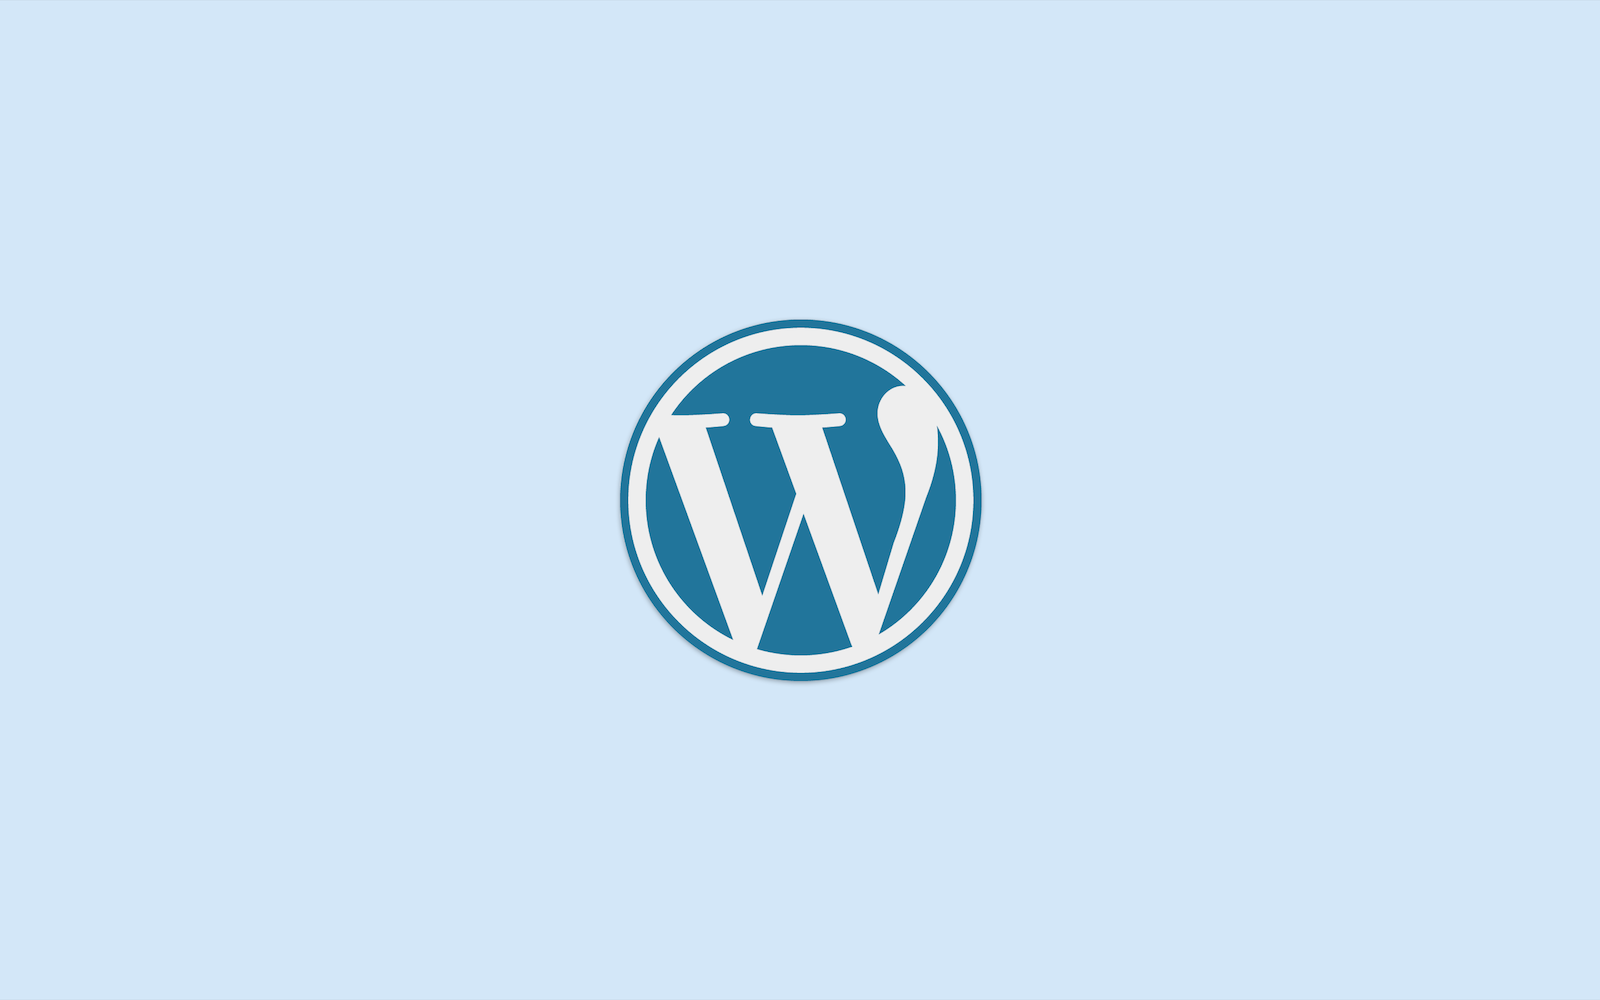 WordPress-Official-Logo